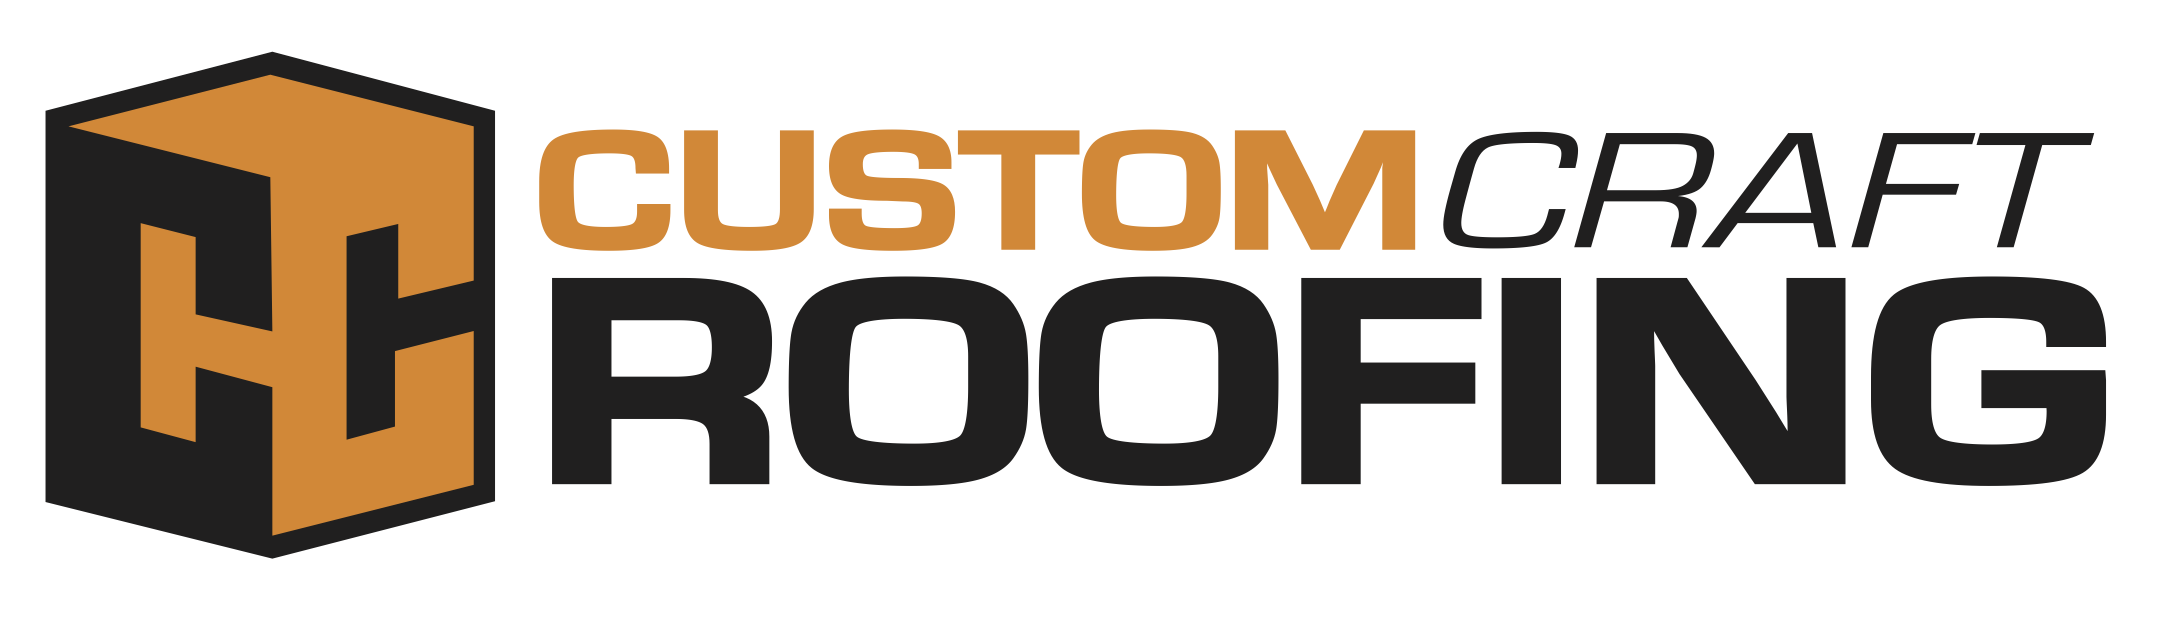 CustomCraft-Roofing-logo (1).png